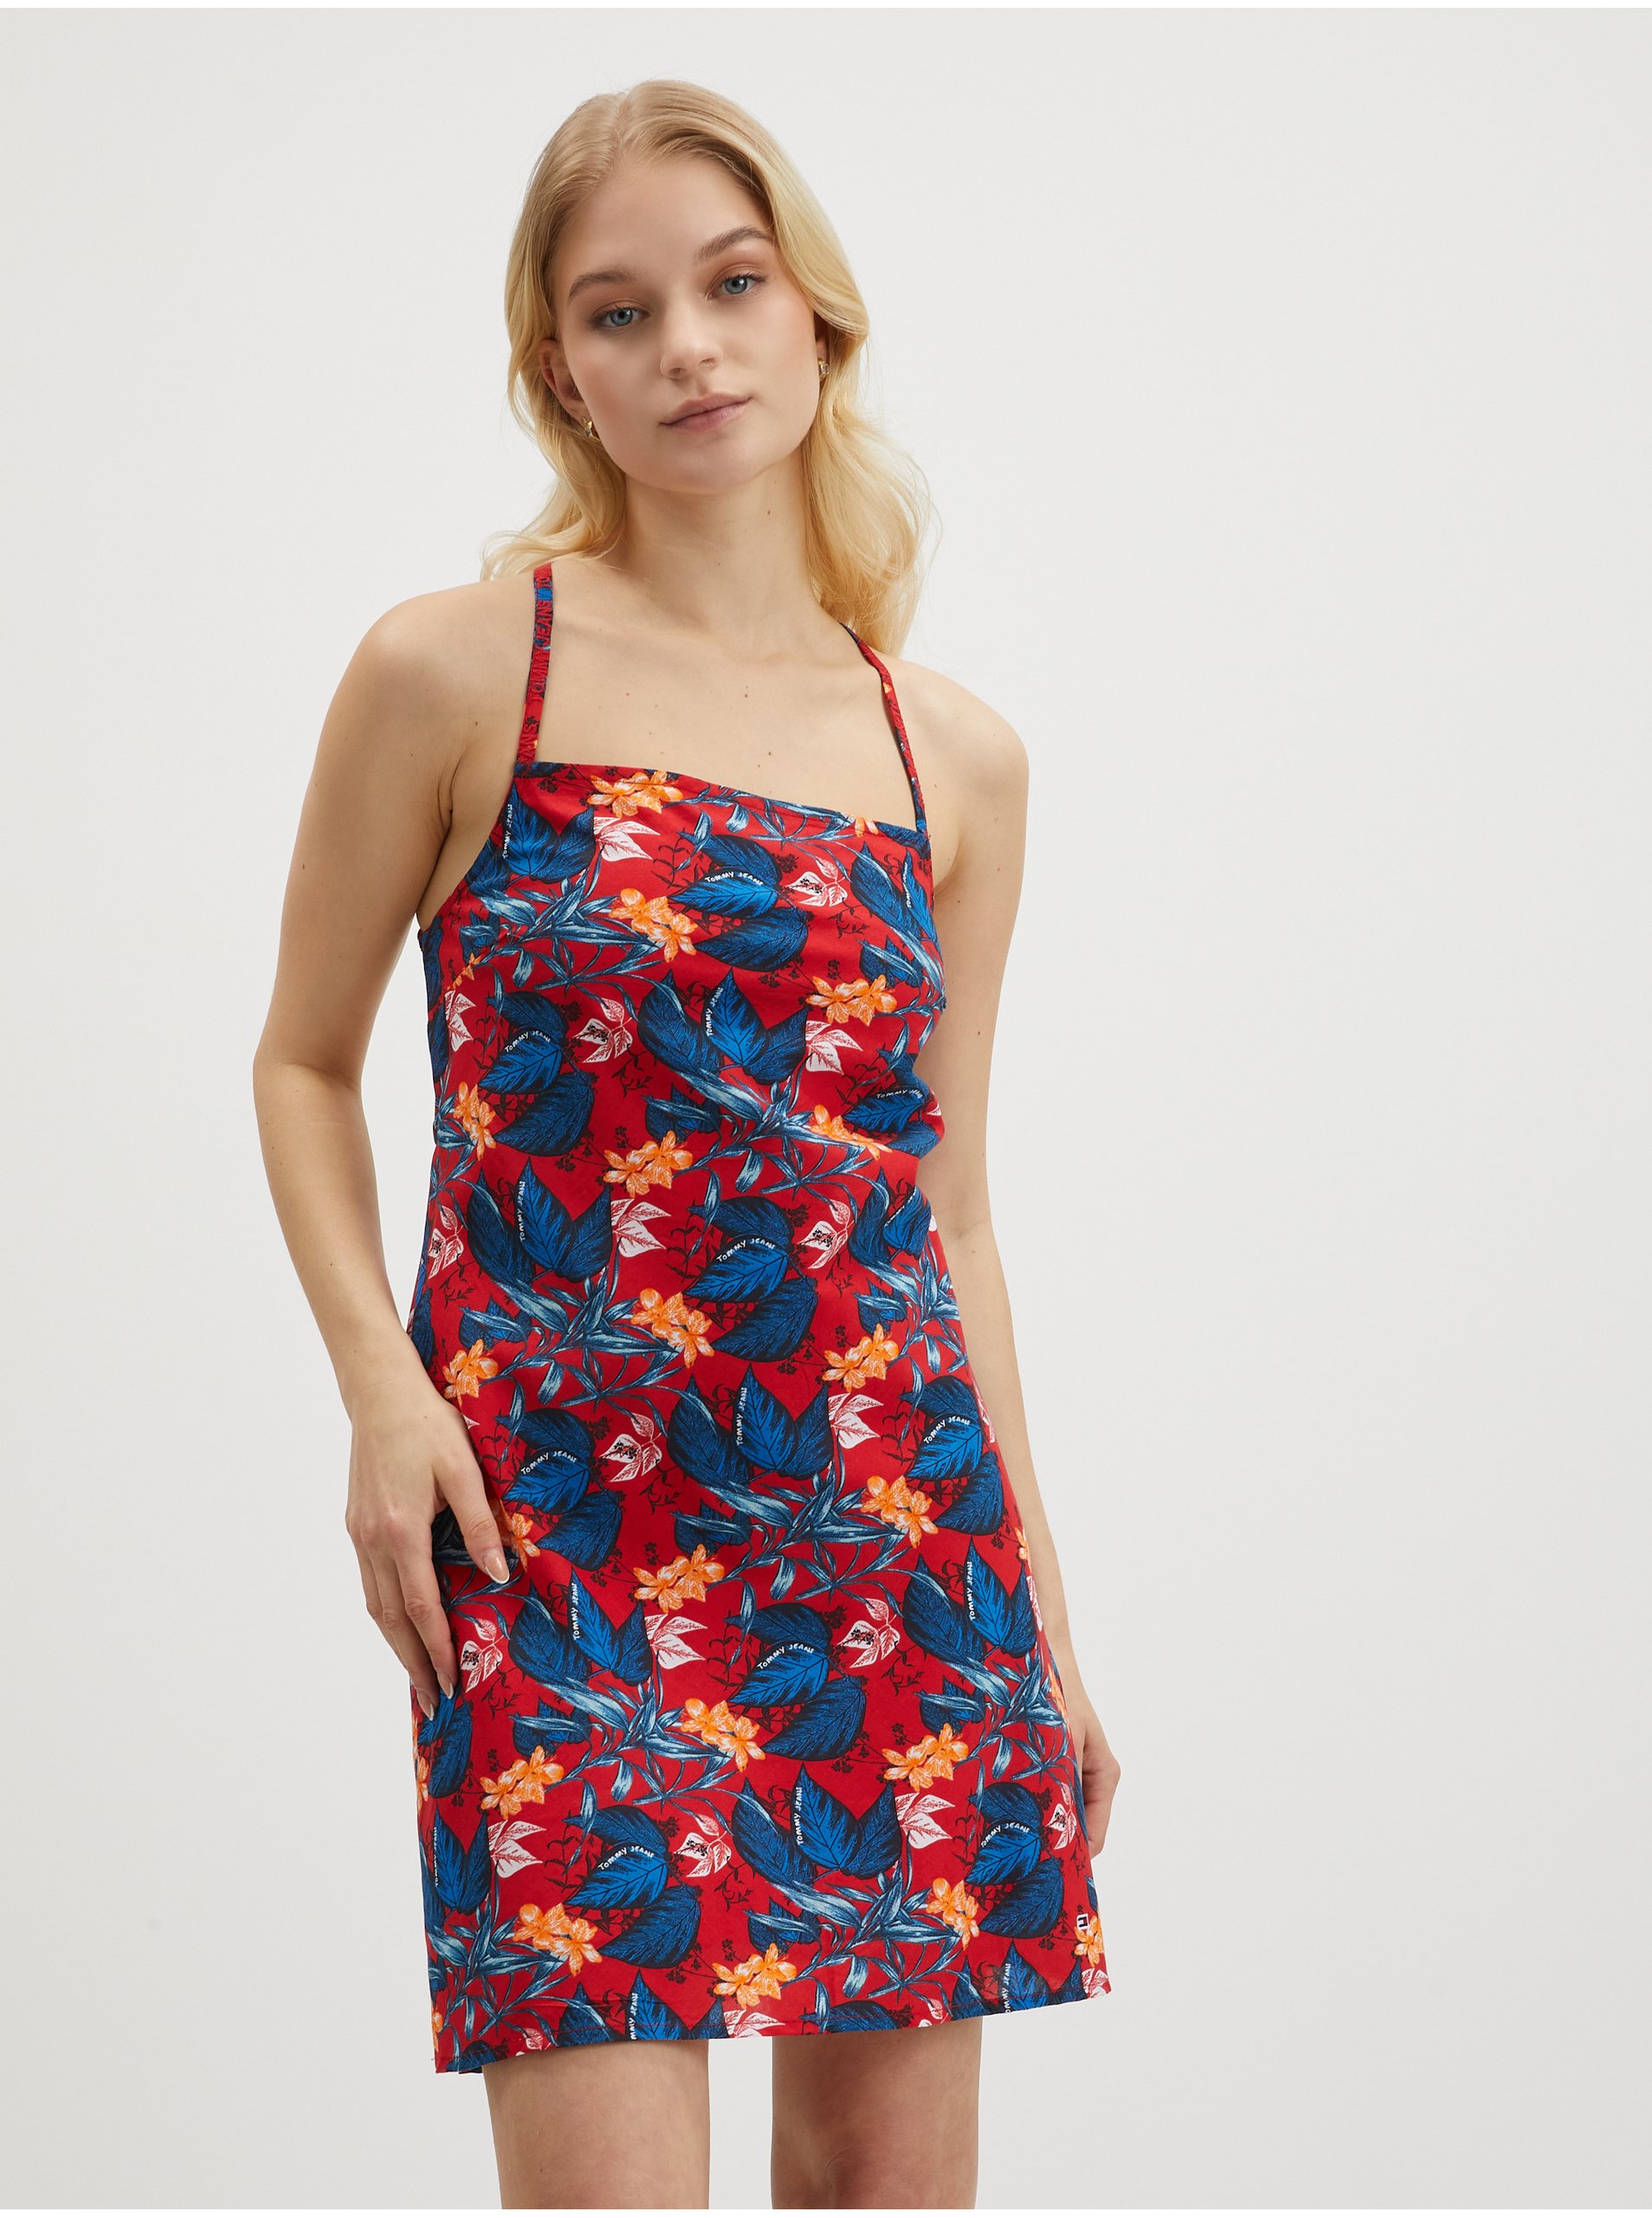 Lacno Letné a plážové šaty pre ženy Tommy Jeans - červená, tmavomodrá